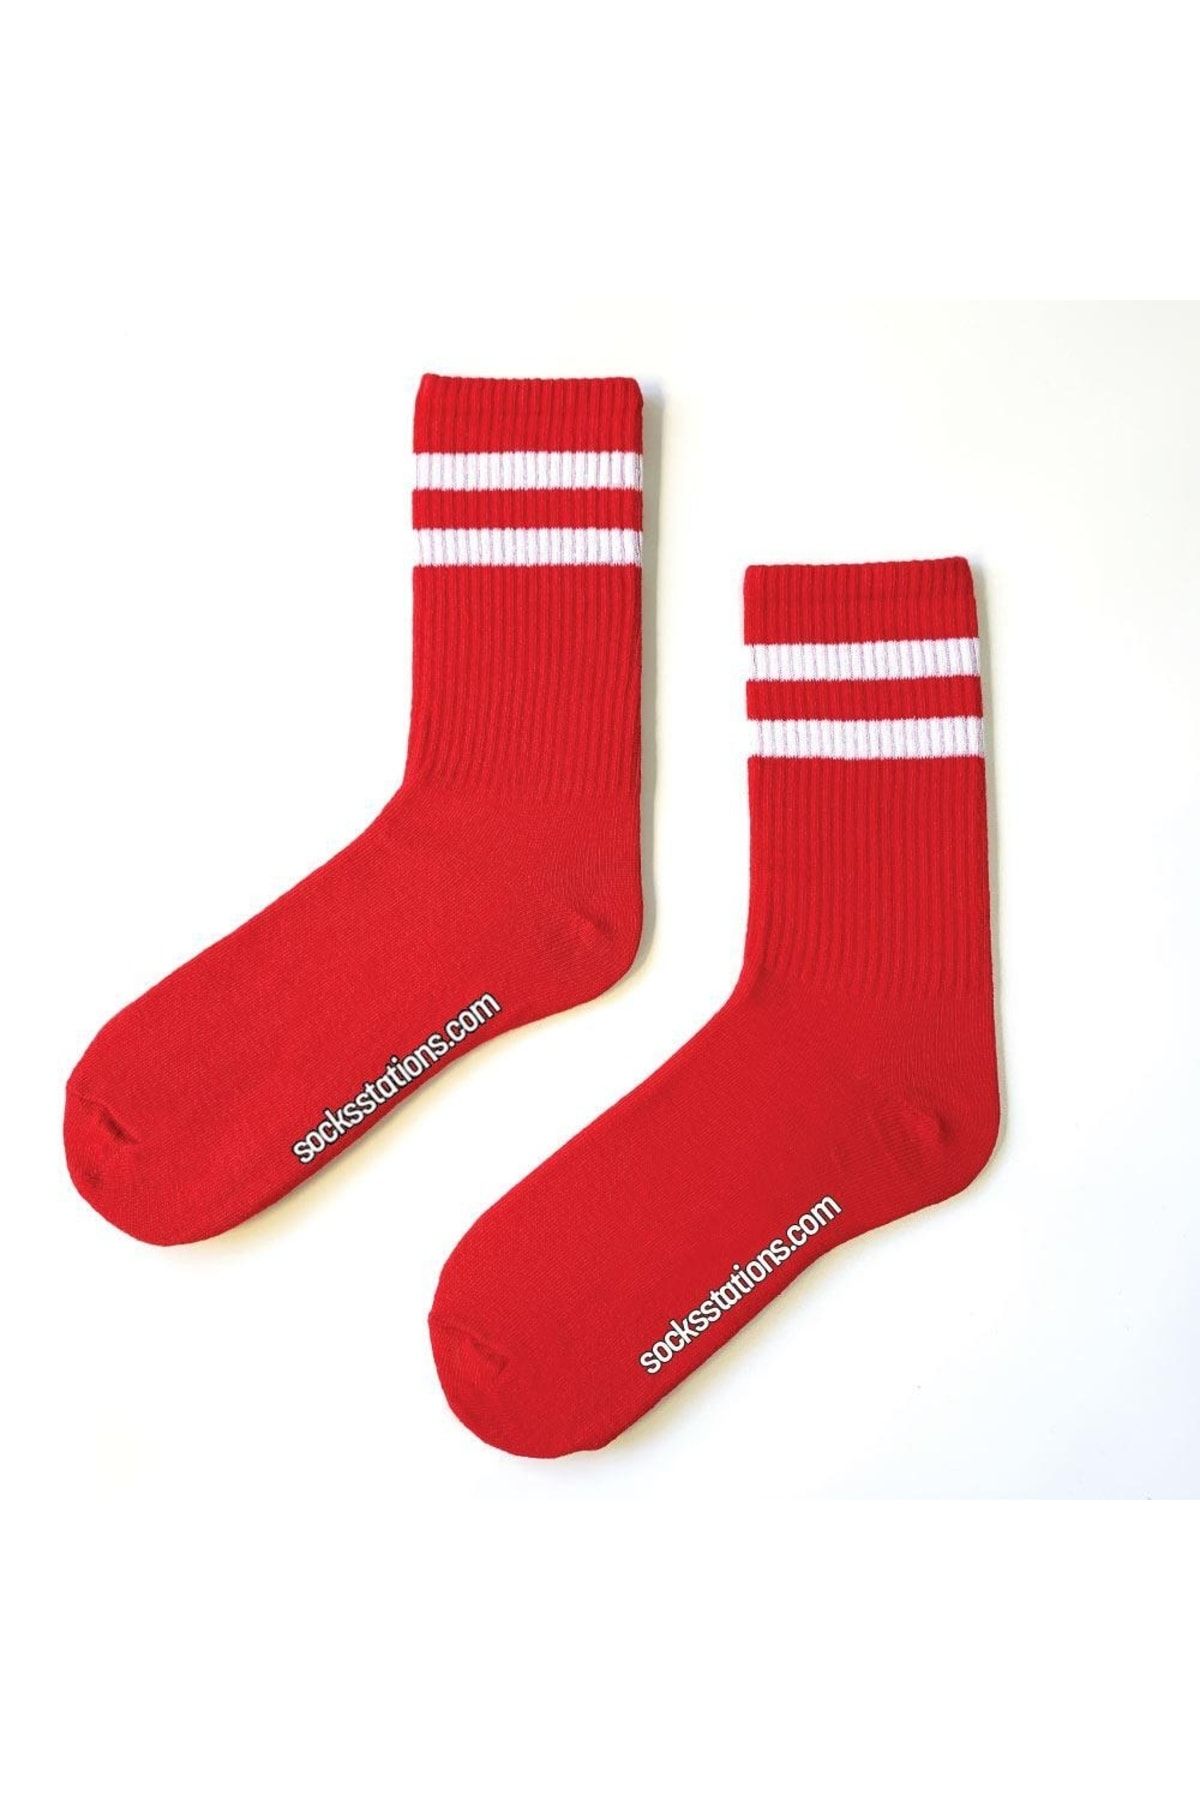 Socks Stations Ünisex Kırmızı Renkli , Beyaz Çizgili Uzun Kolej Spor Çorap